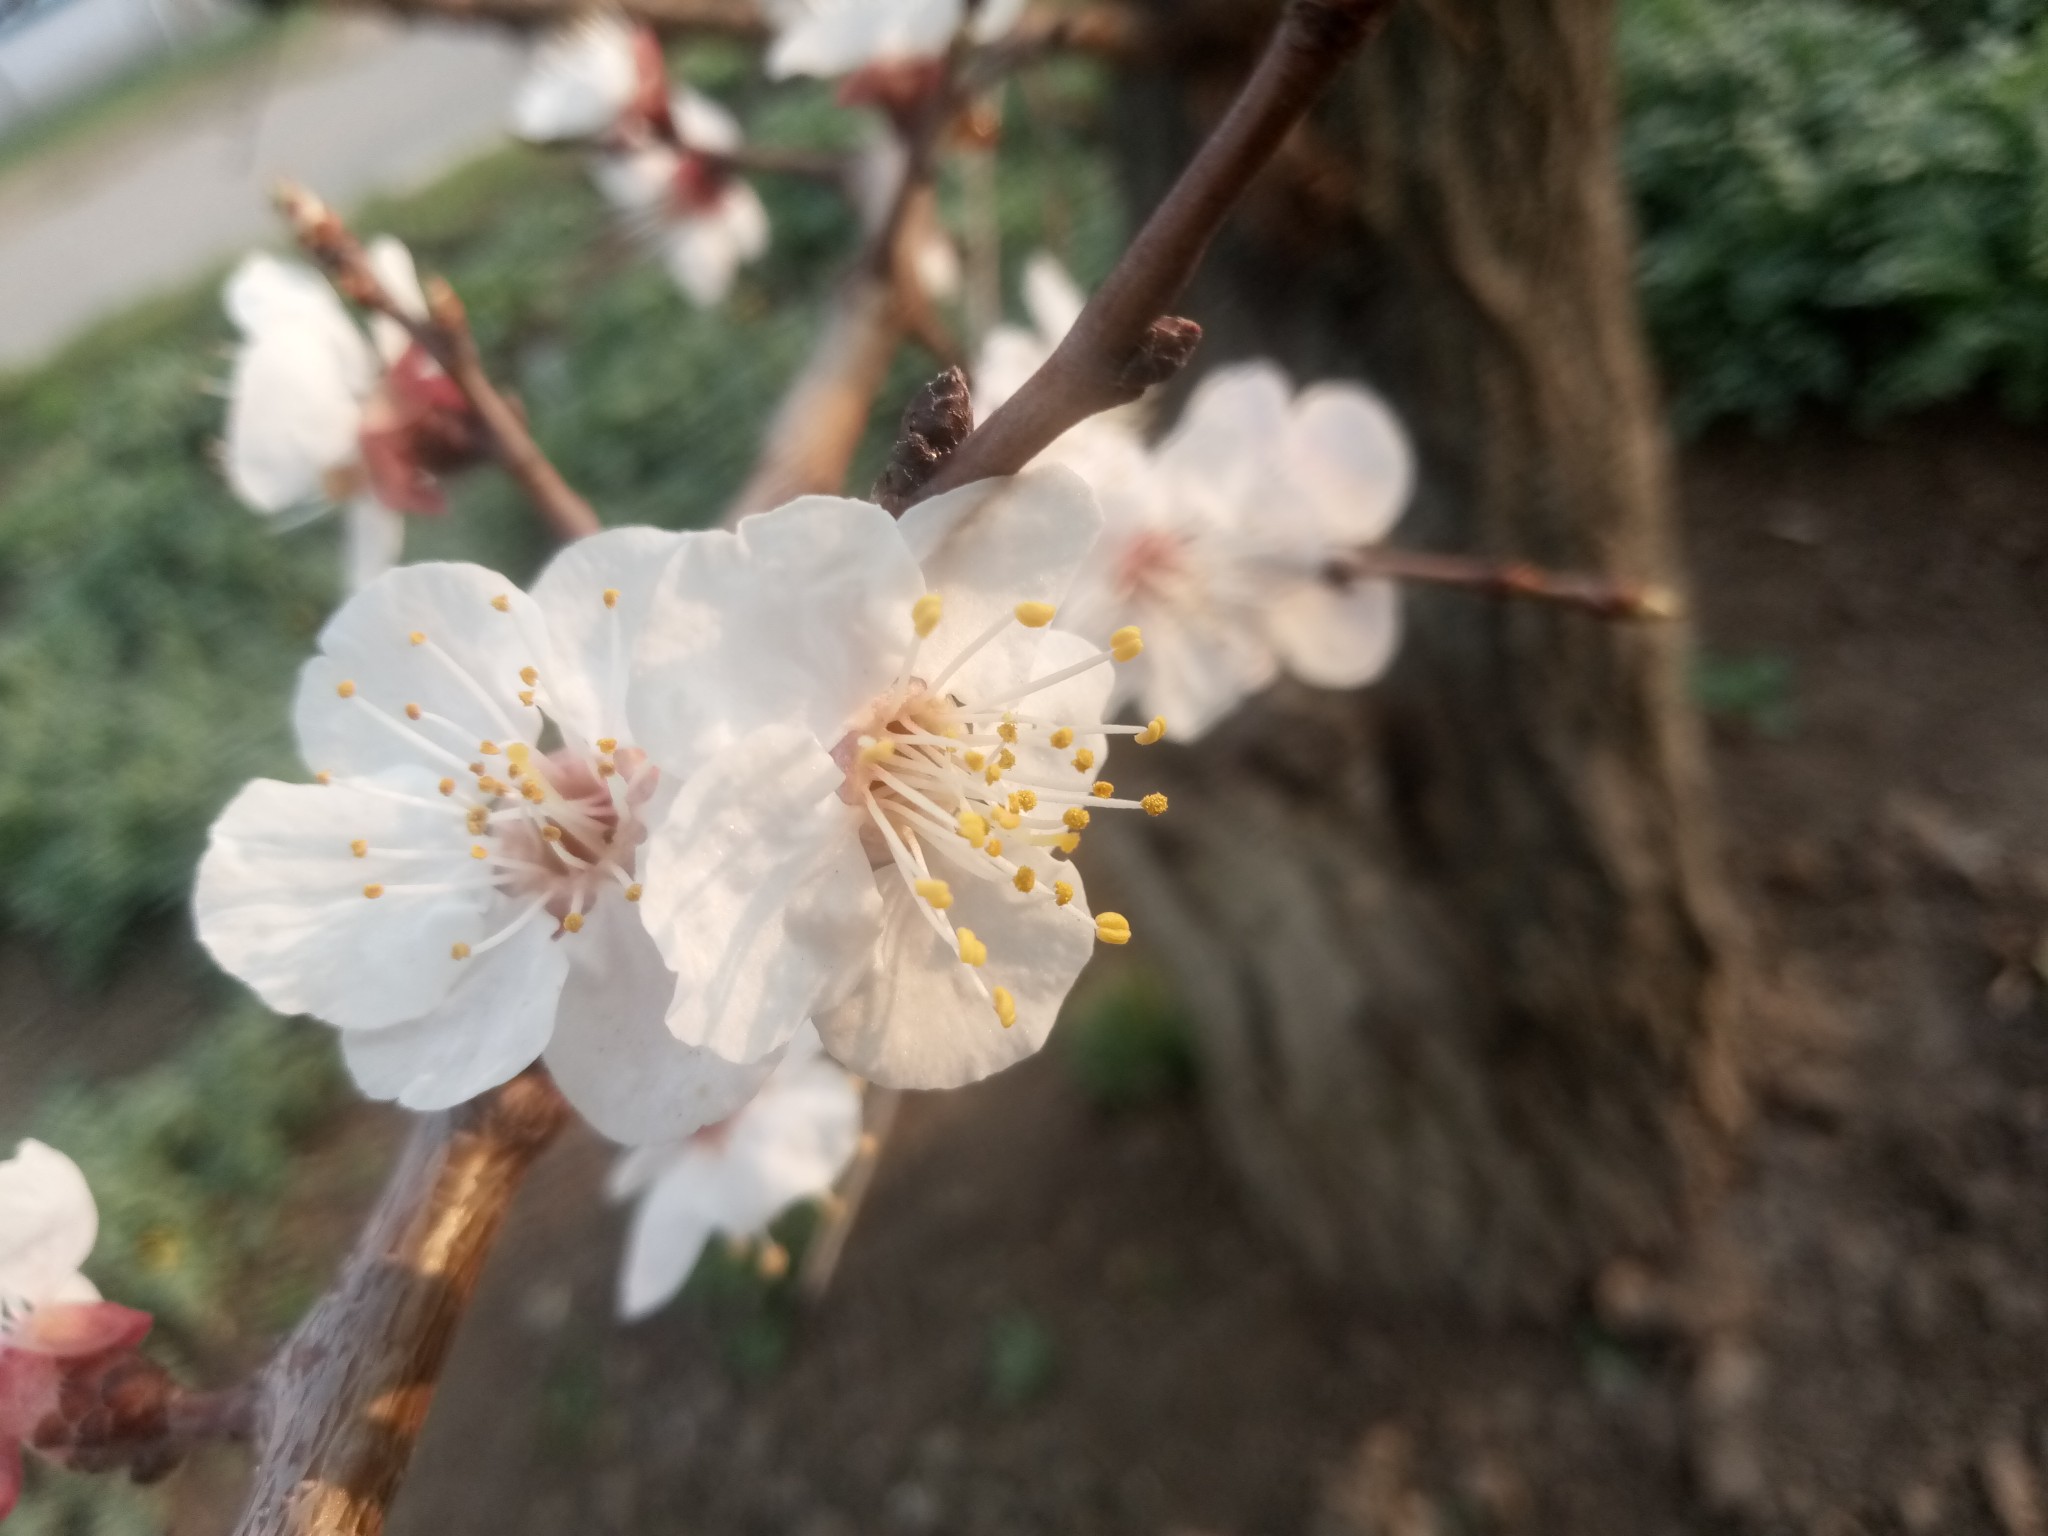 Flowering apricot tree 